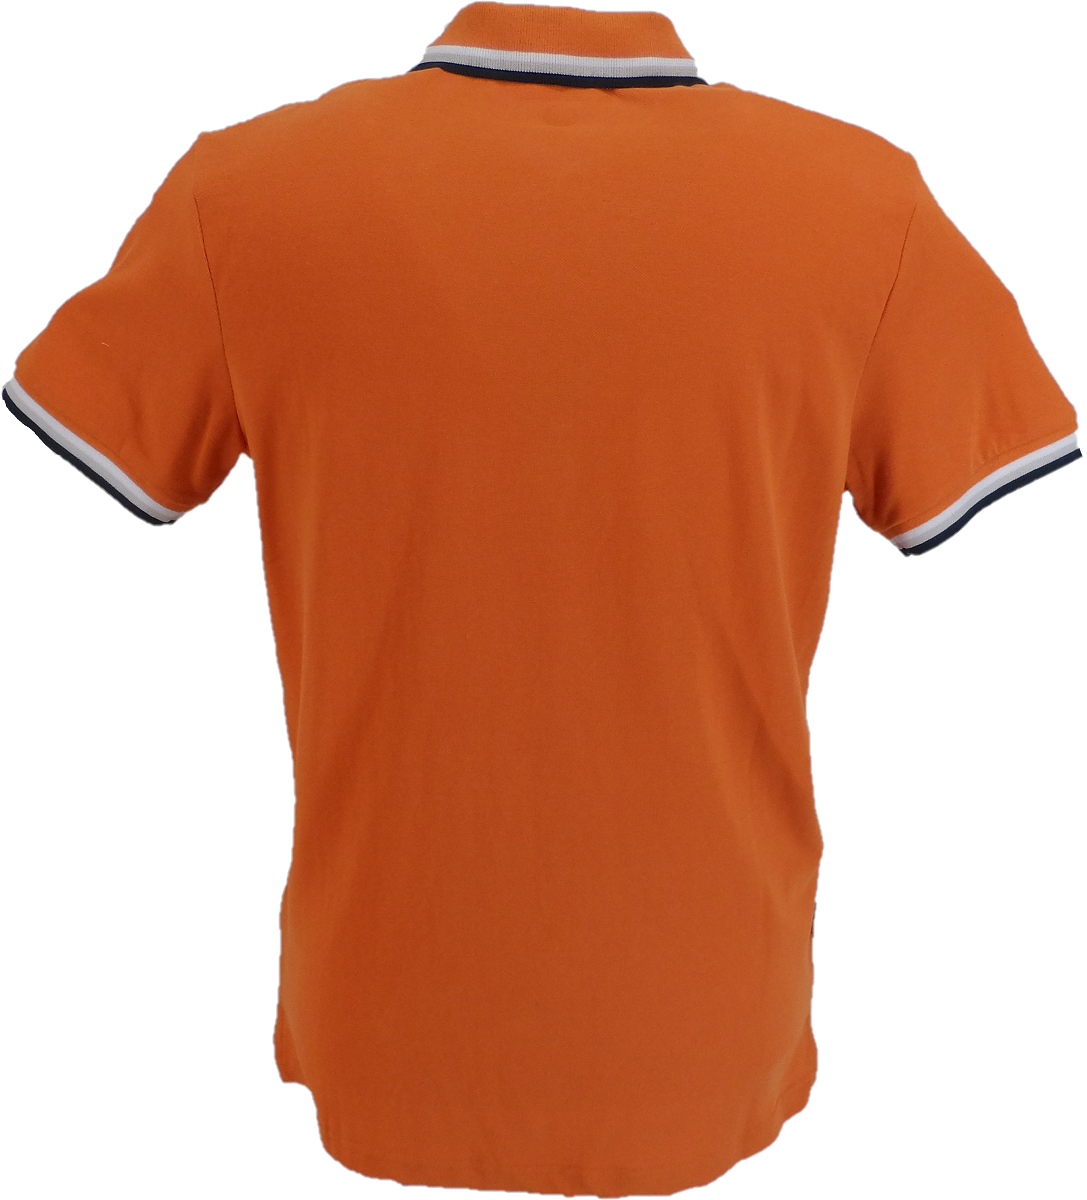 Lambrettaオレンジ/ホワイト/グレー/ネイビー レトロターゲットロゴ 綿100% ポロシャツ